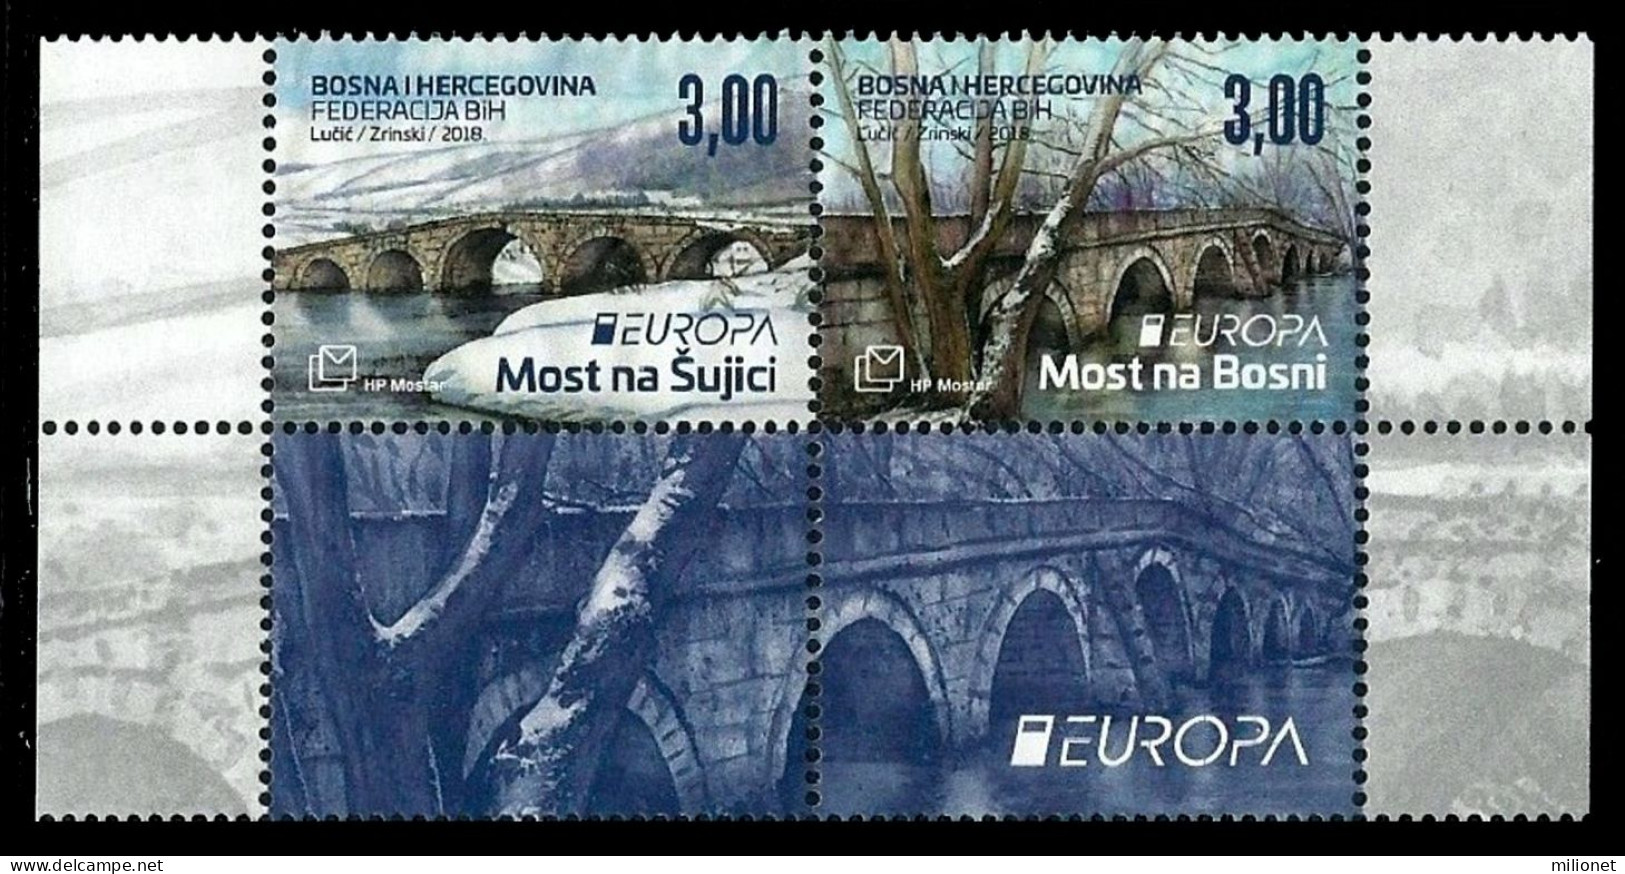 SALE!!! BOSNIA HERZEGOVINA CROAT POST (MOSTAR) 2018 EUROPA CEPT Bridges 2 Stamps + 2 Vignettes MNH ** - 2018